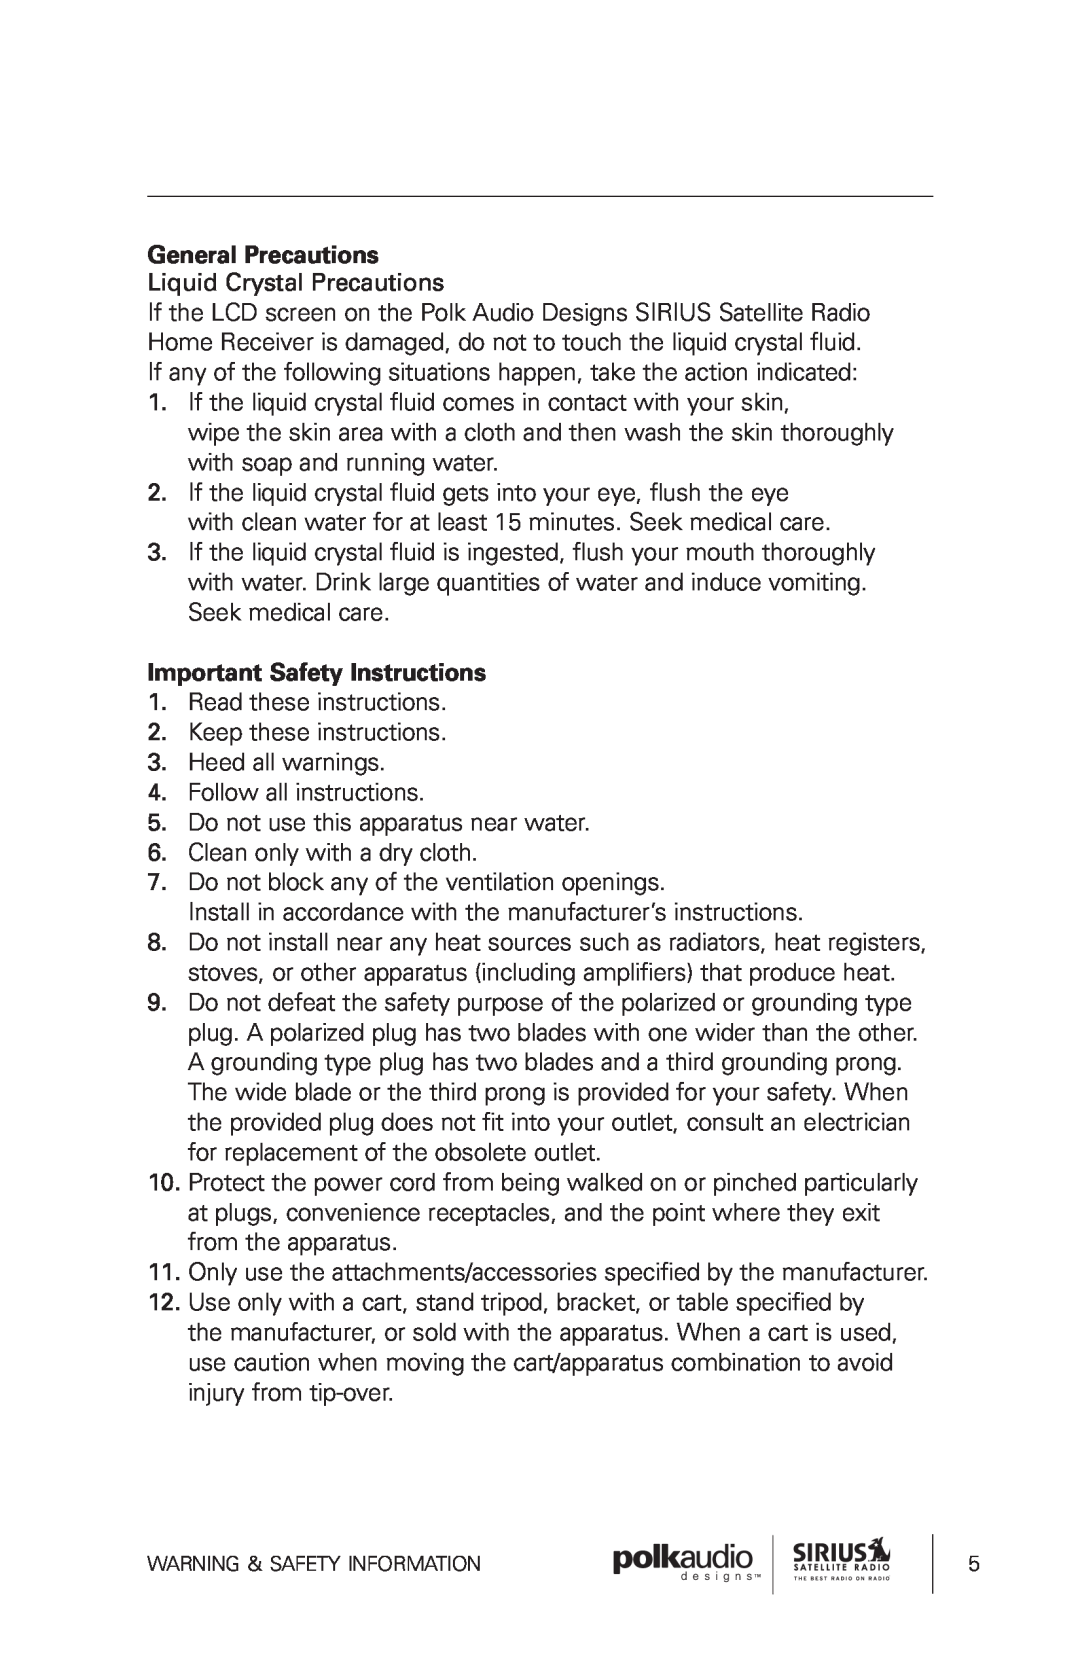 Sirius Satellite Radio SRH1000 manual General Precautions, Important Safety Instructions 